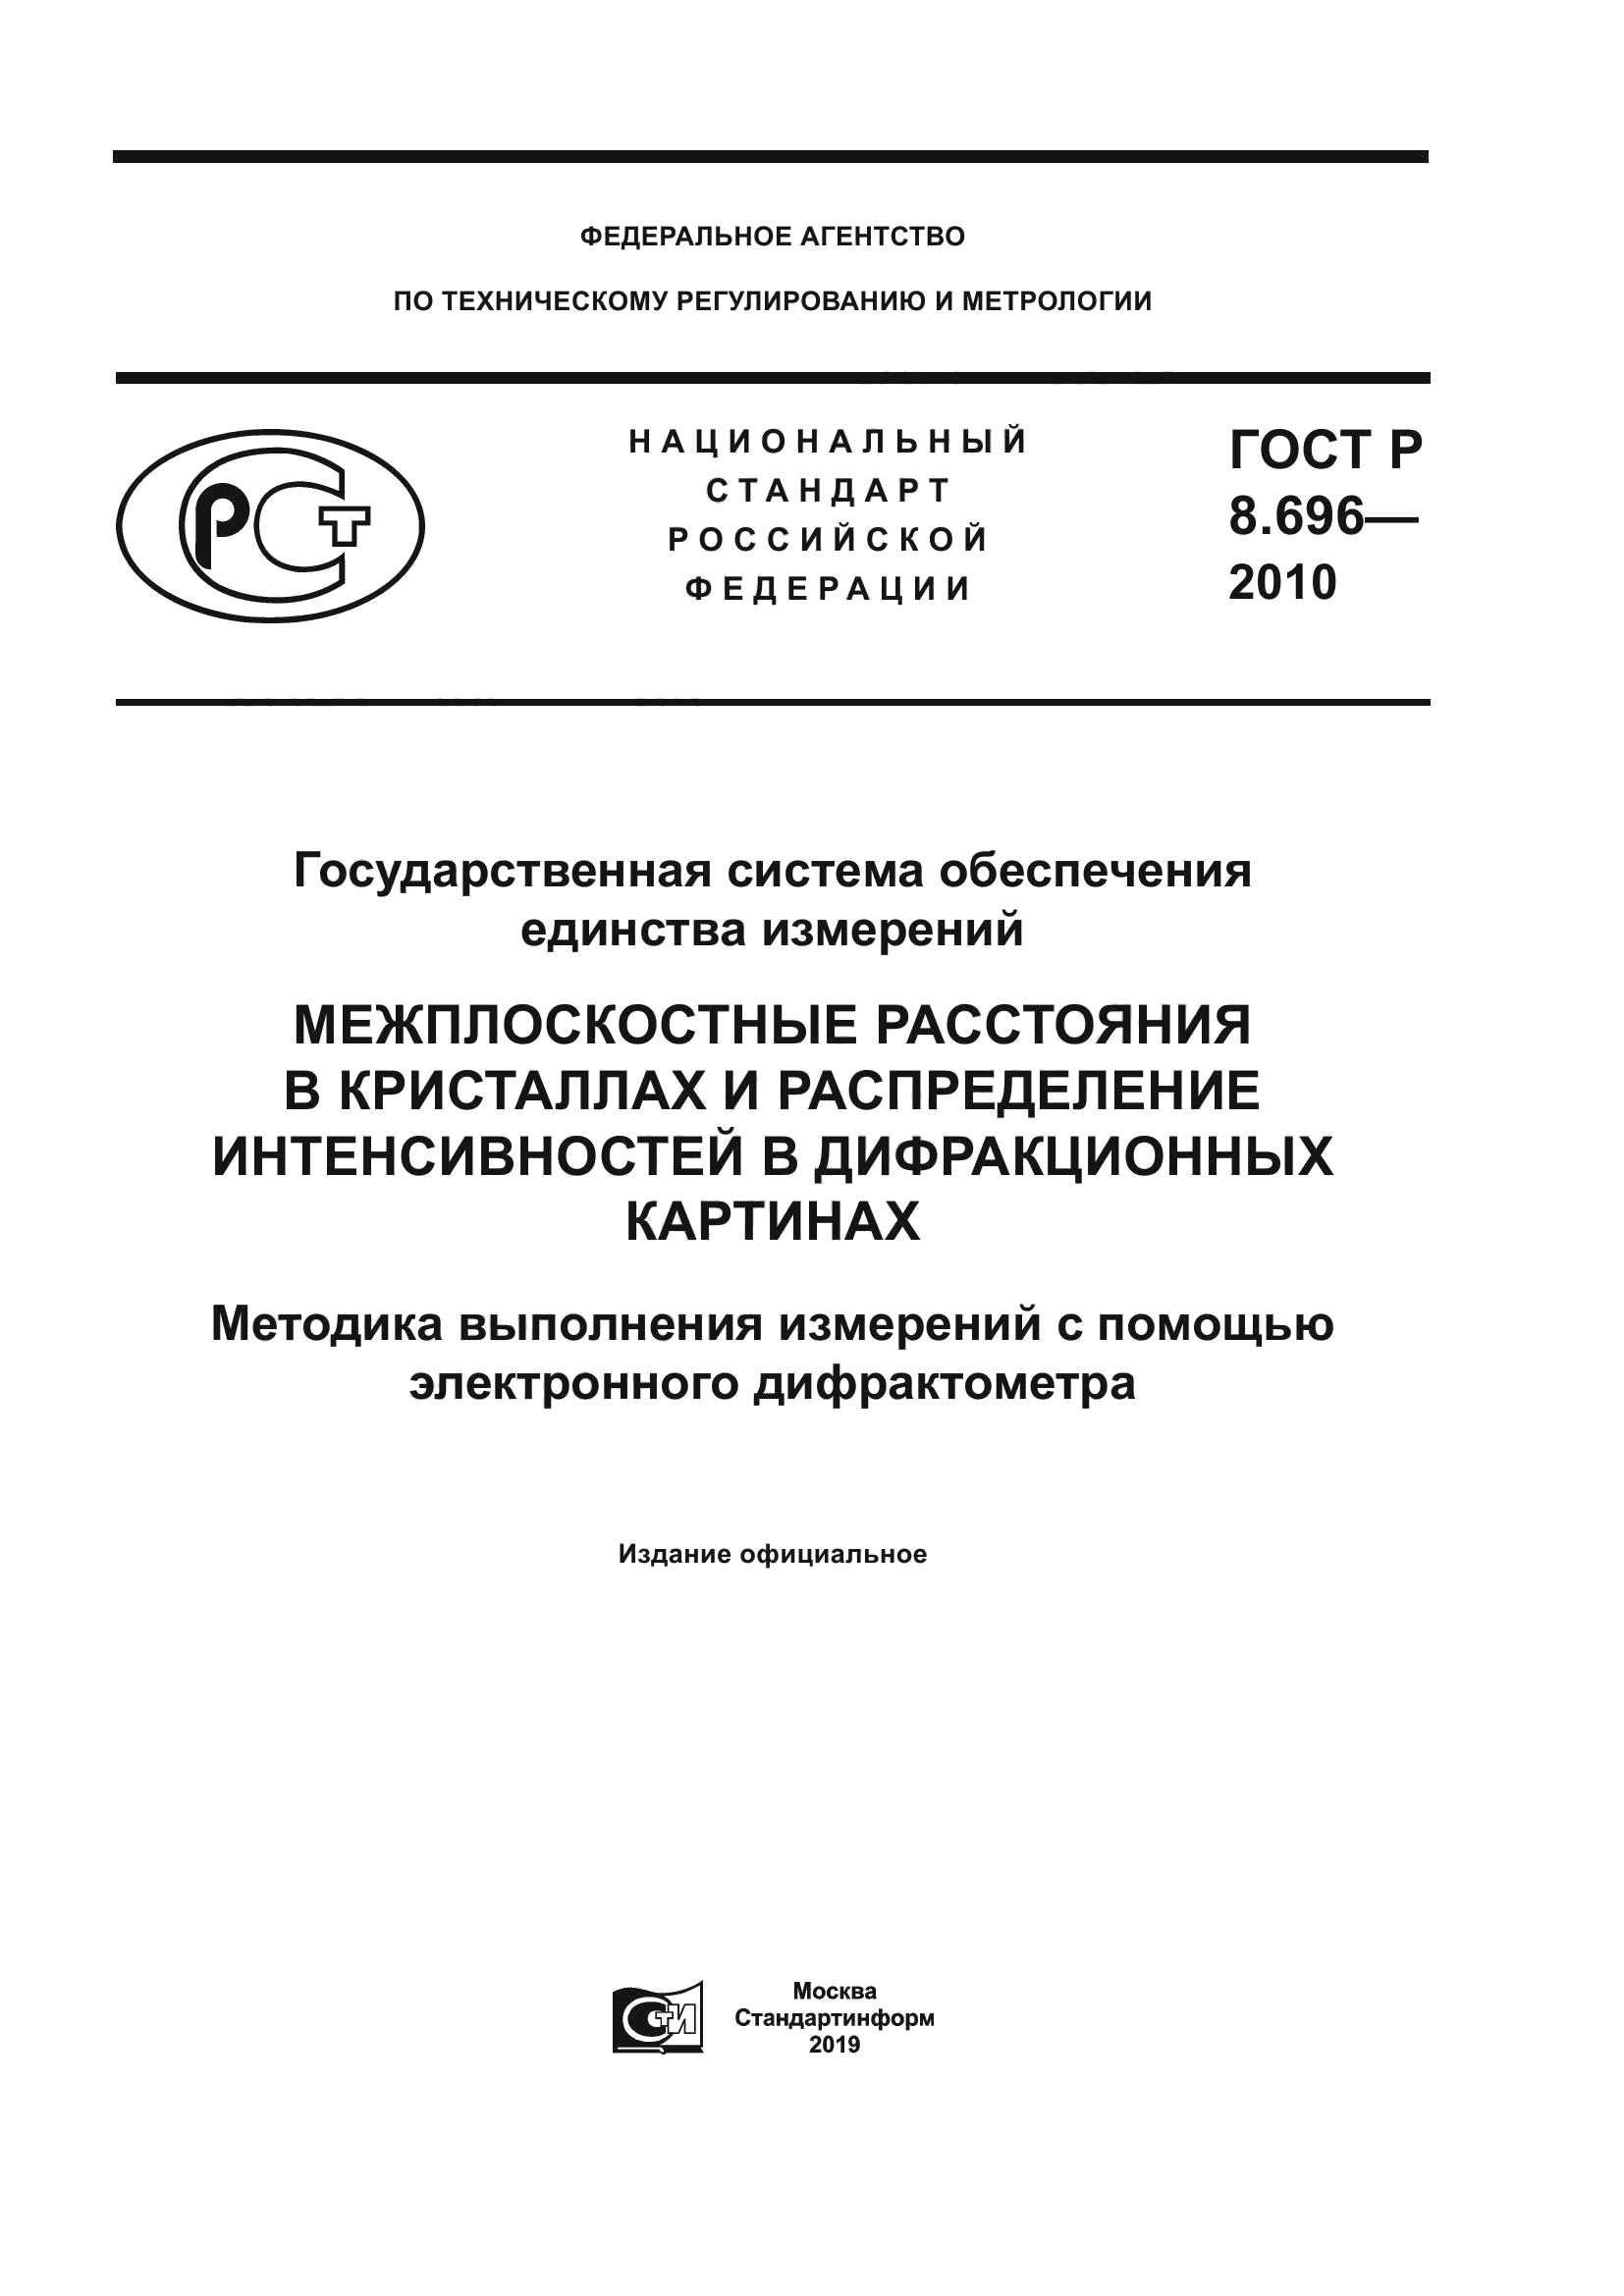 ГОСТ Р 8.696-2010